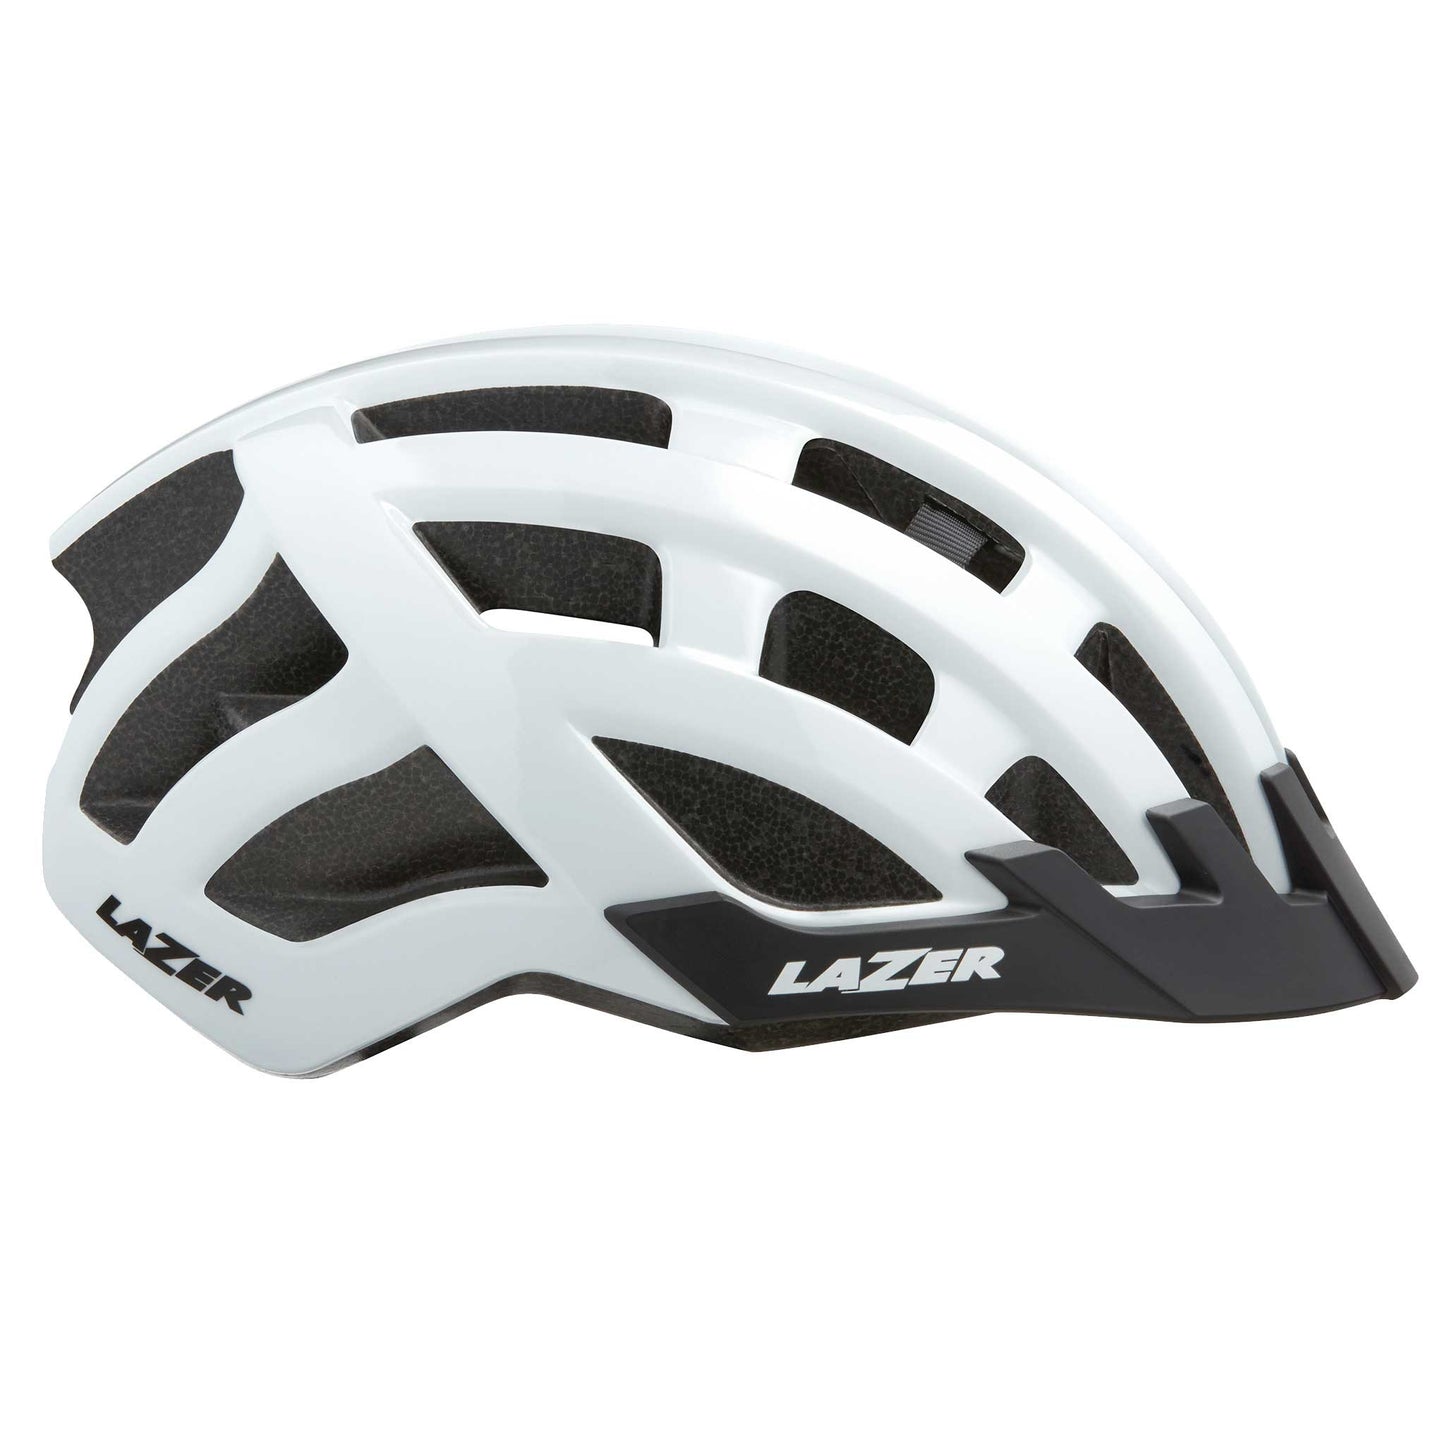 Lazer Compact Helmet, White, Unisizebuy online at Woolys Wheels Sydney